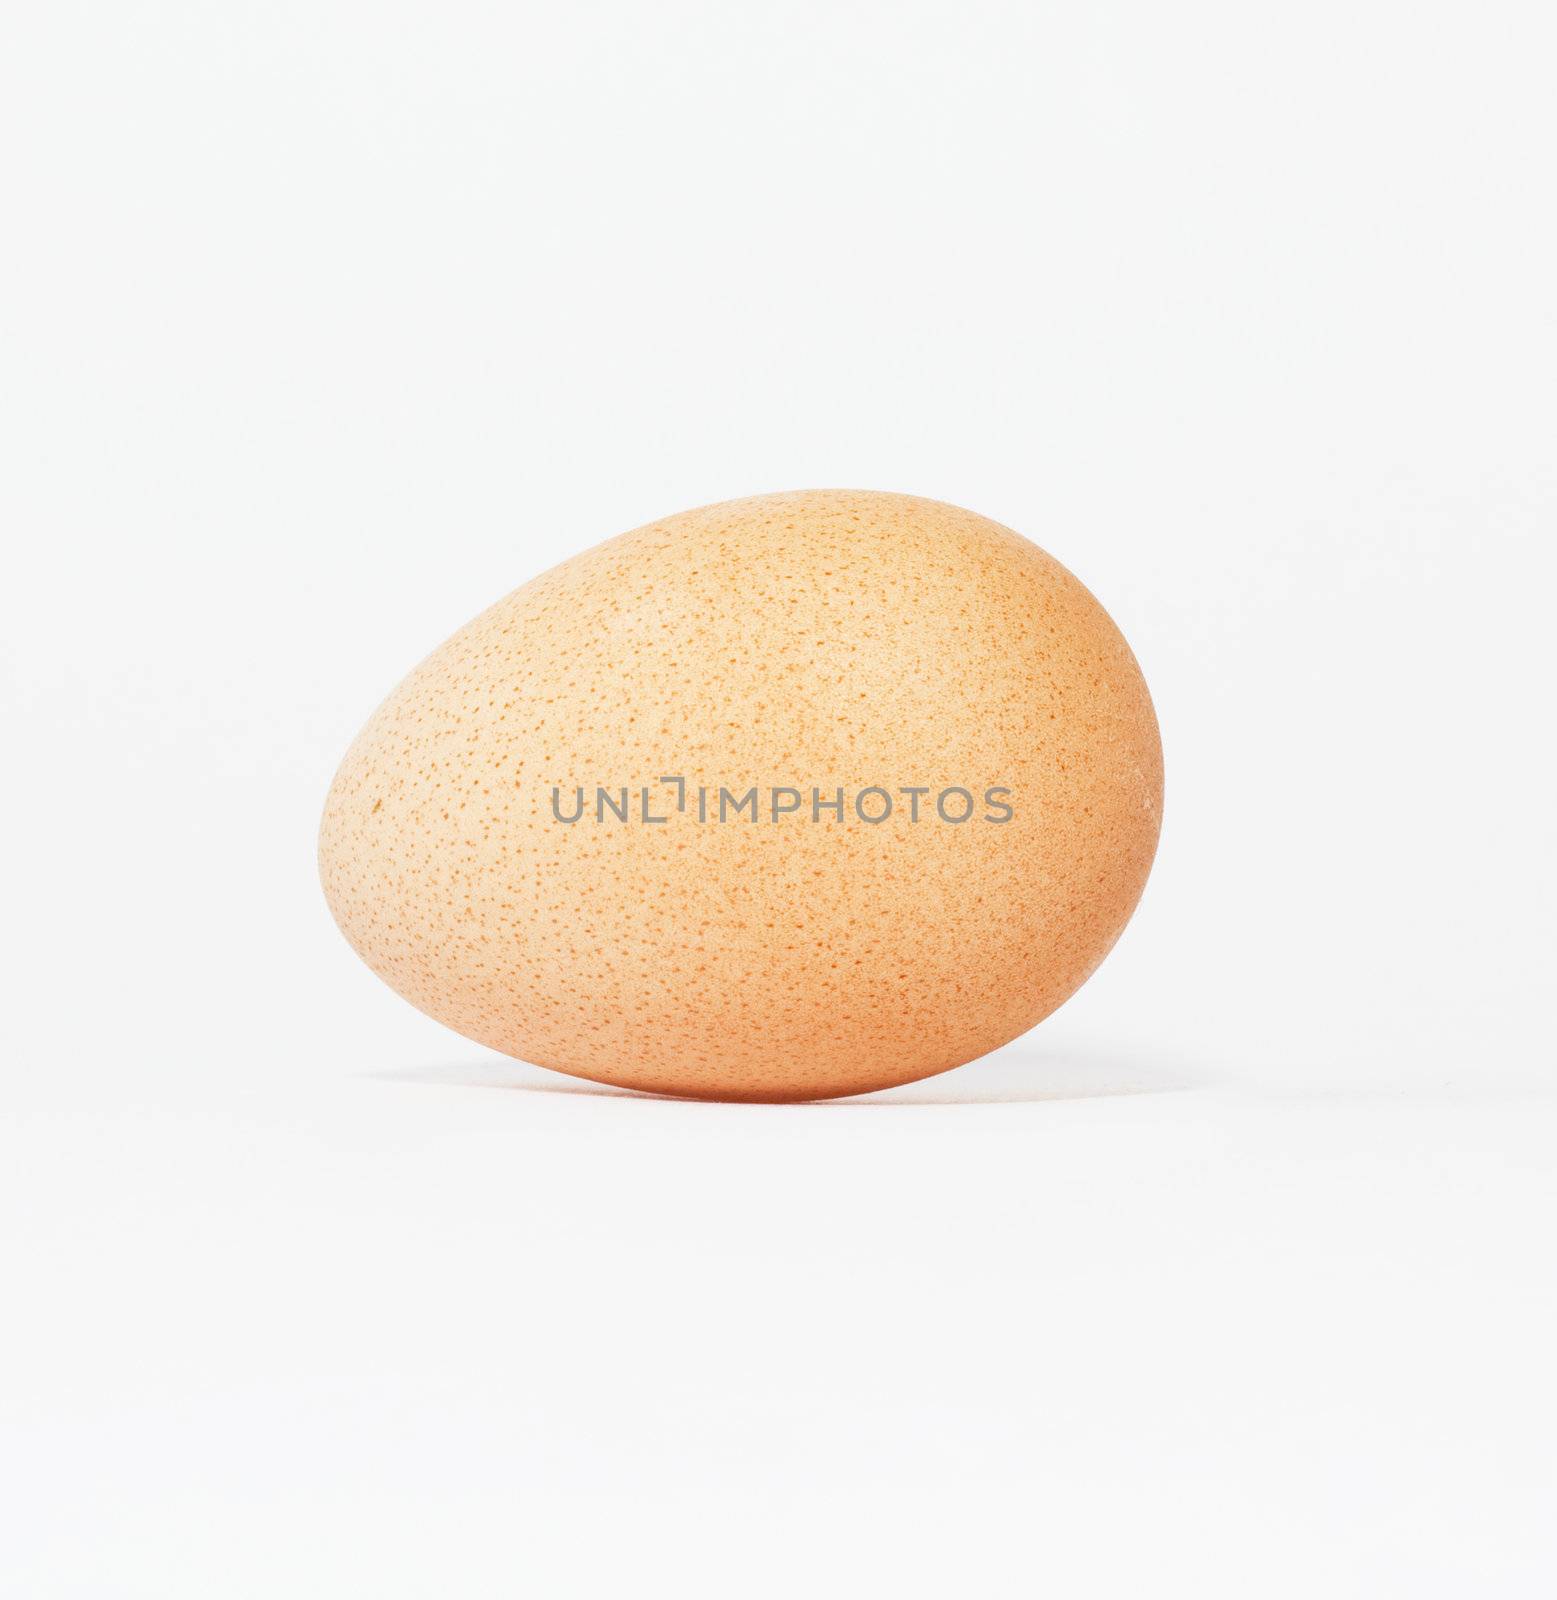 Egg of a guinea fowl